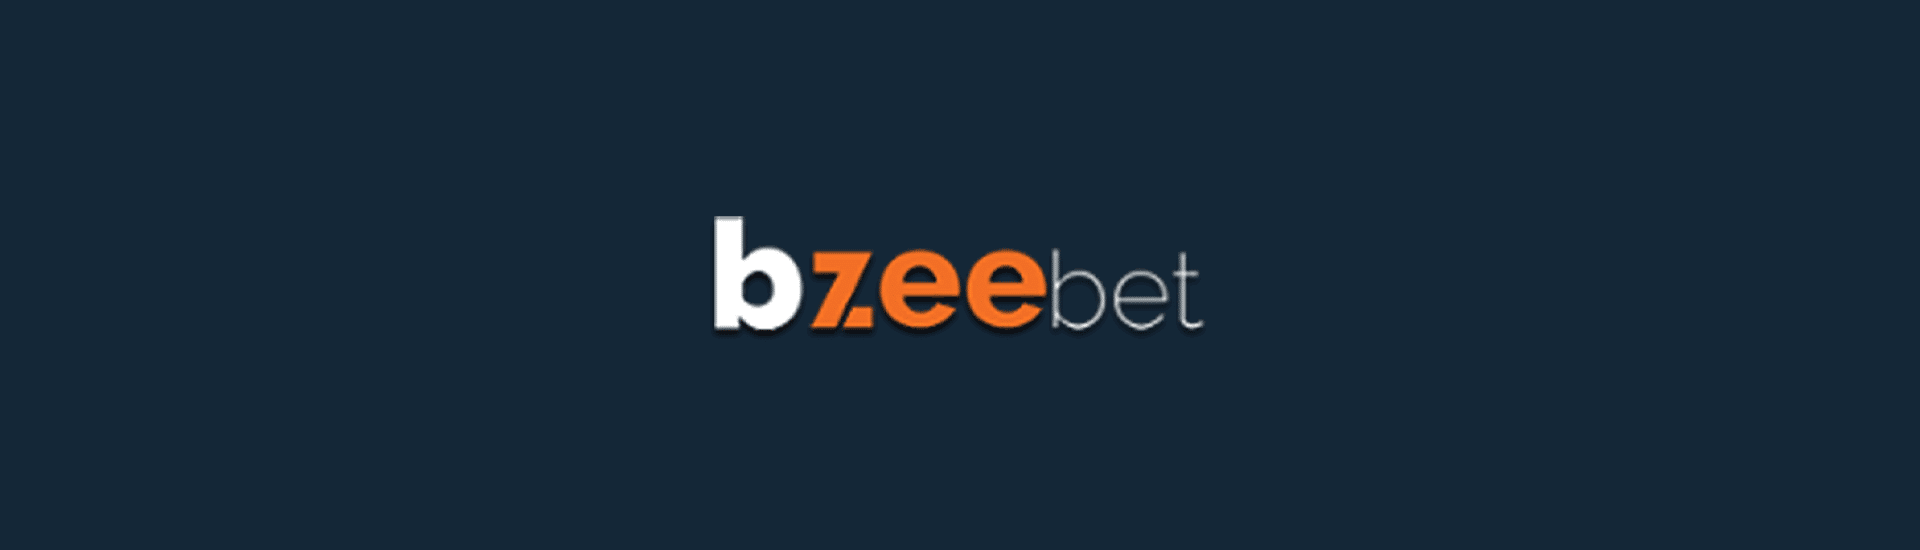 Bzeebet Featured Image